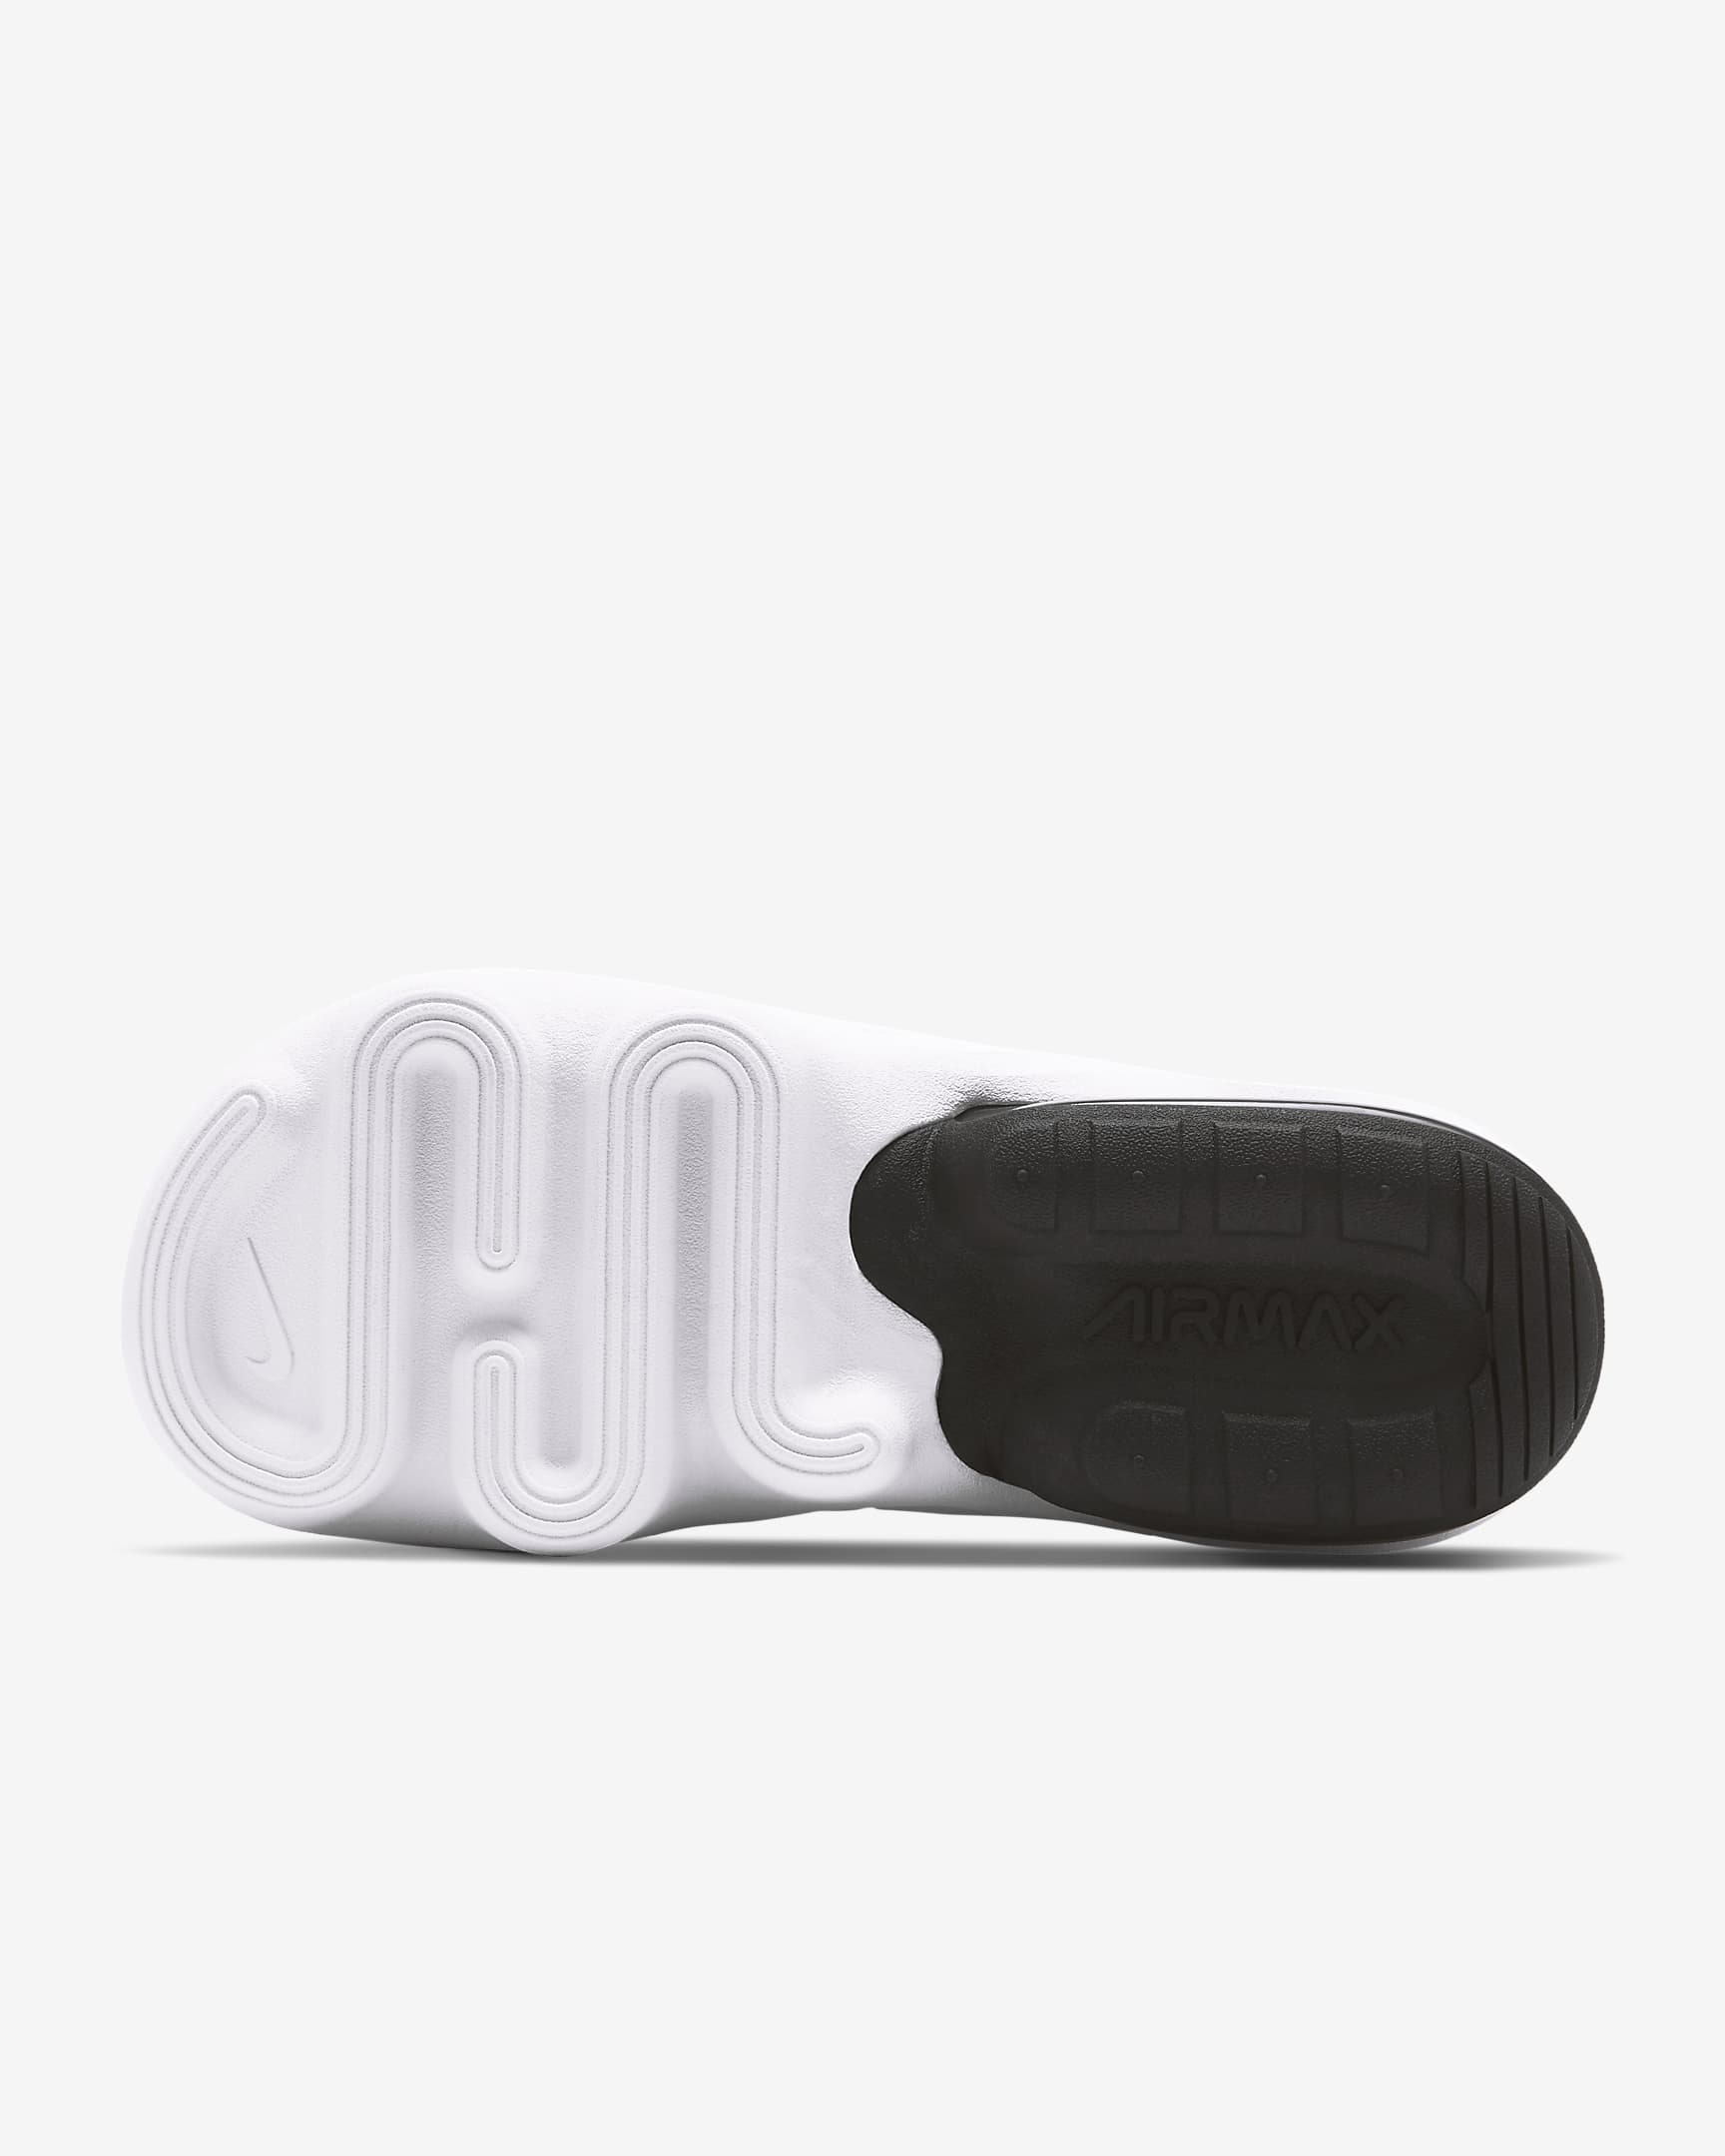 Nike Air Max Koko Women's Sandals - Black/Anthracite/White/Metallic Gold